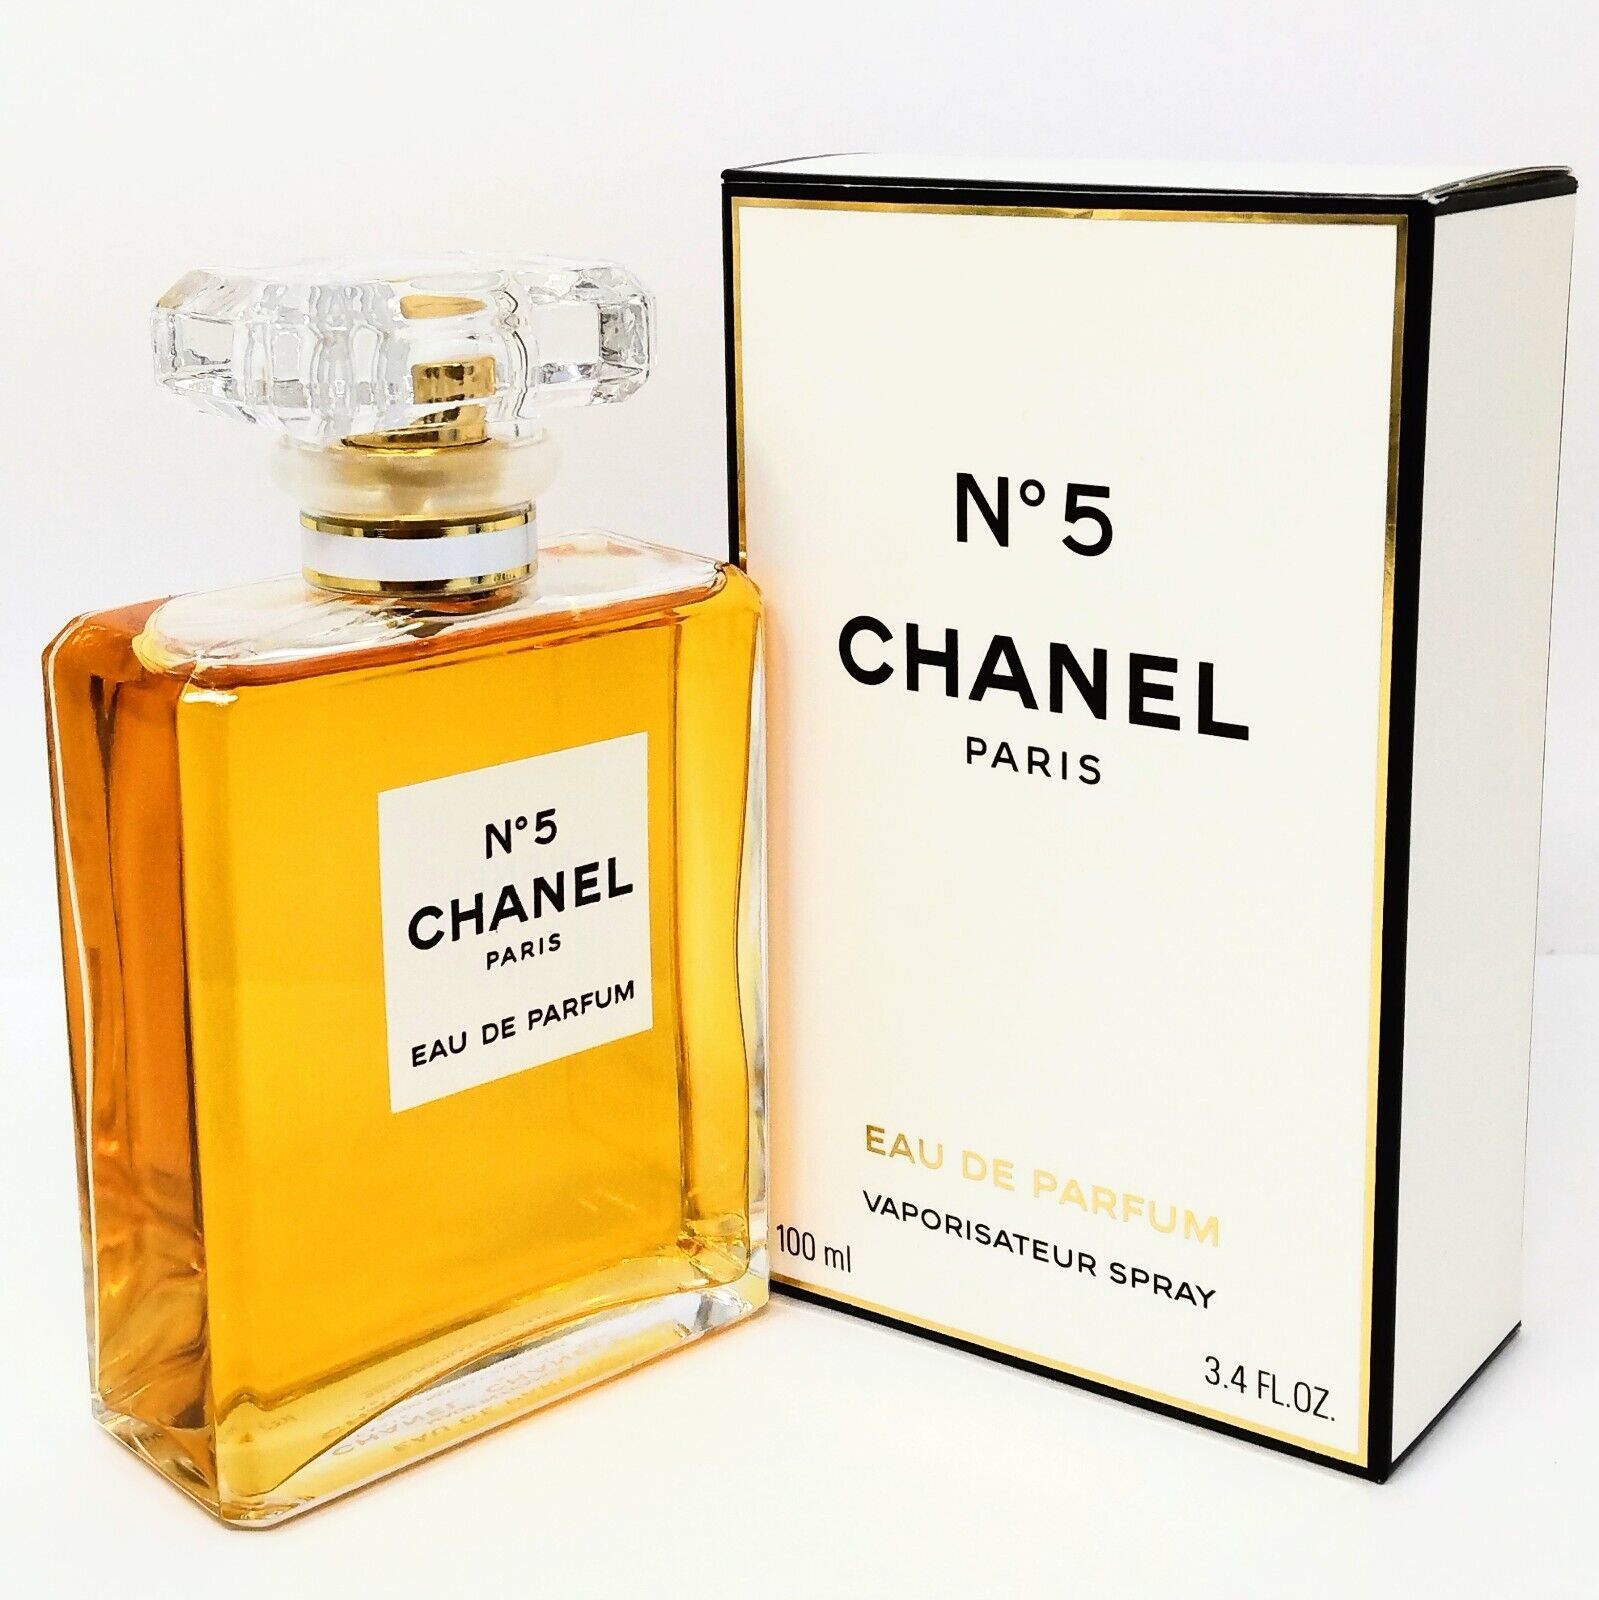 Chanel N5 3.4 fl oz 100 ml EAU DE Parfum and similar items